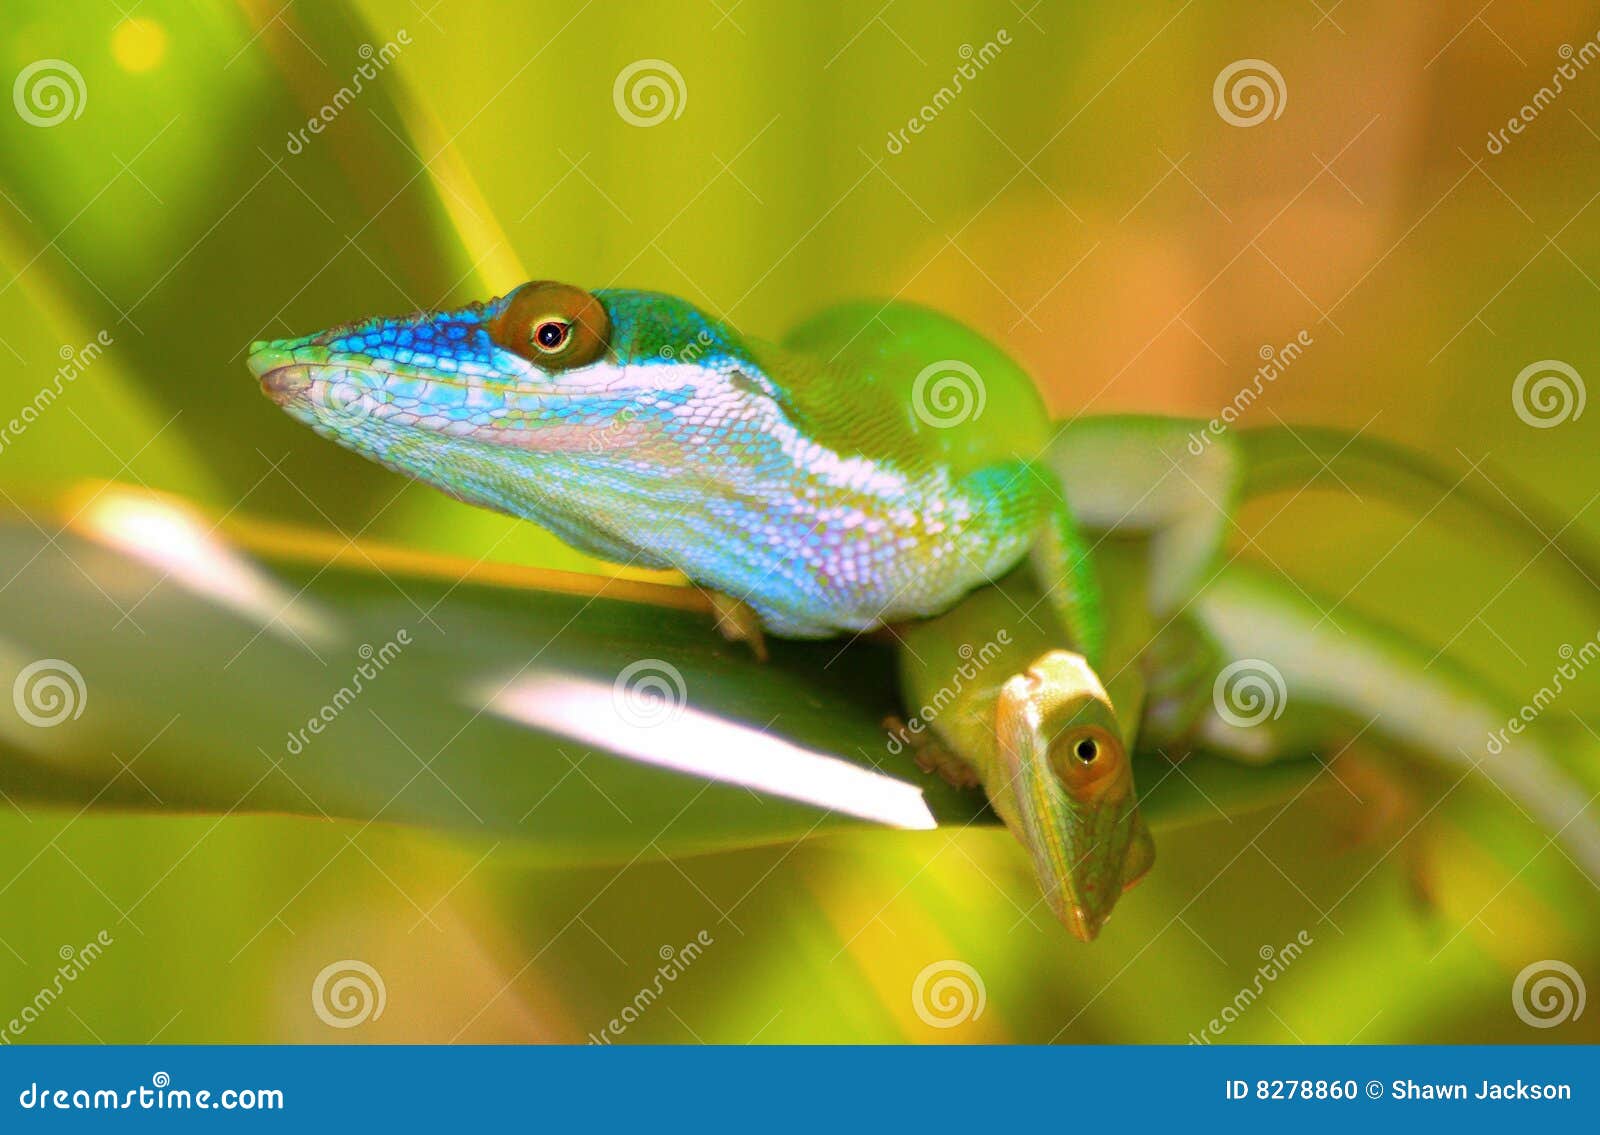 lizards on leaf